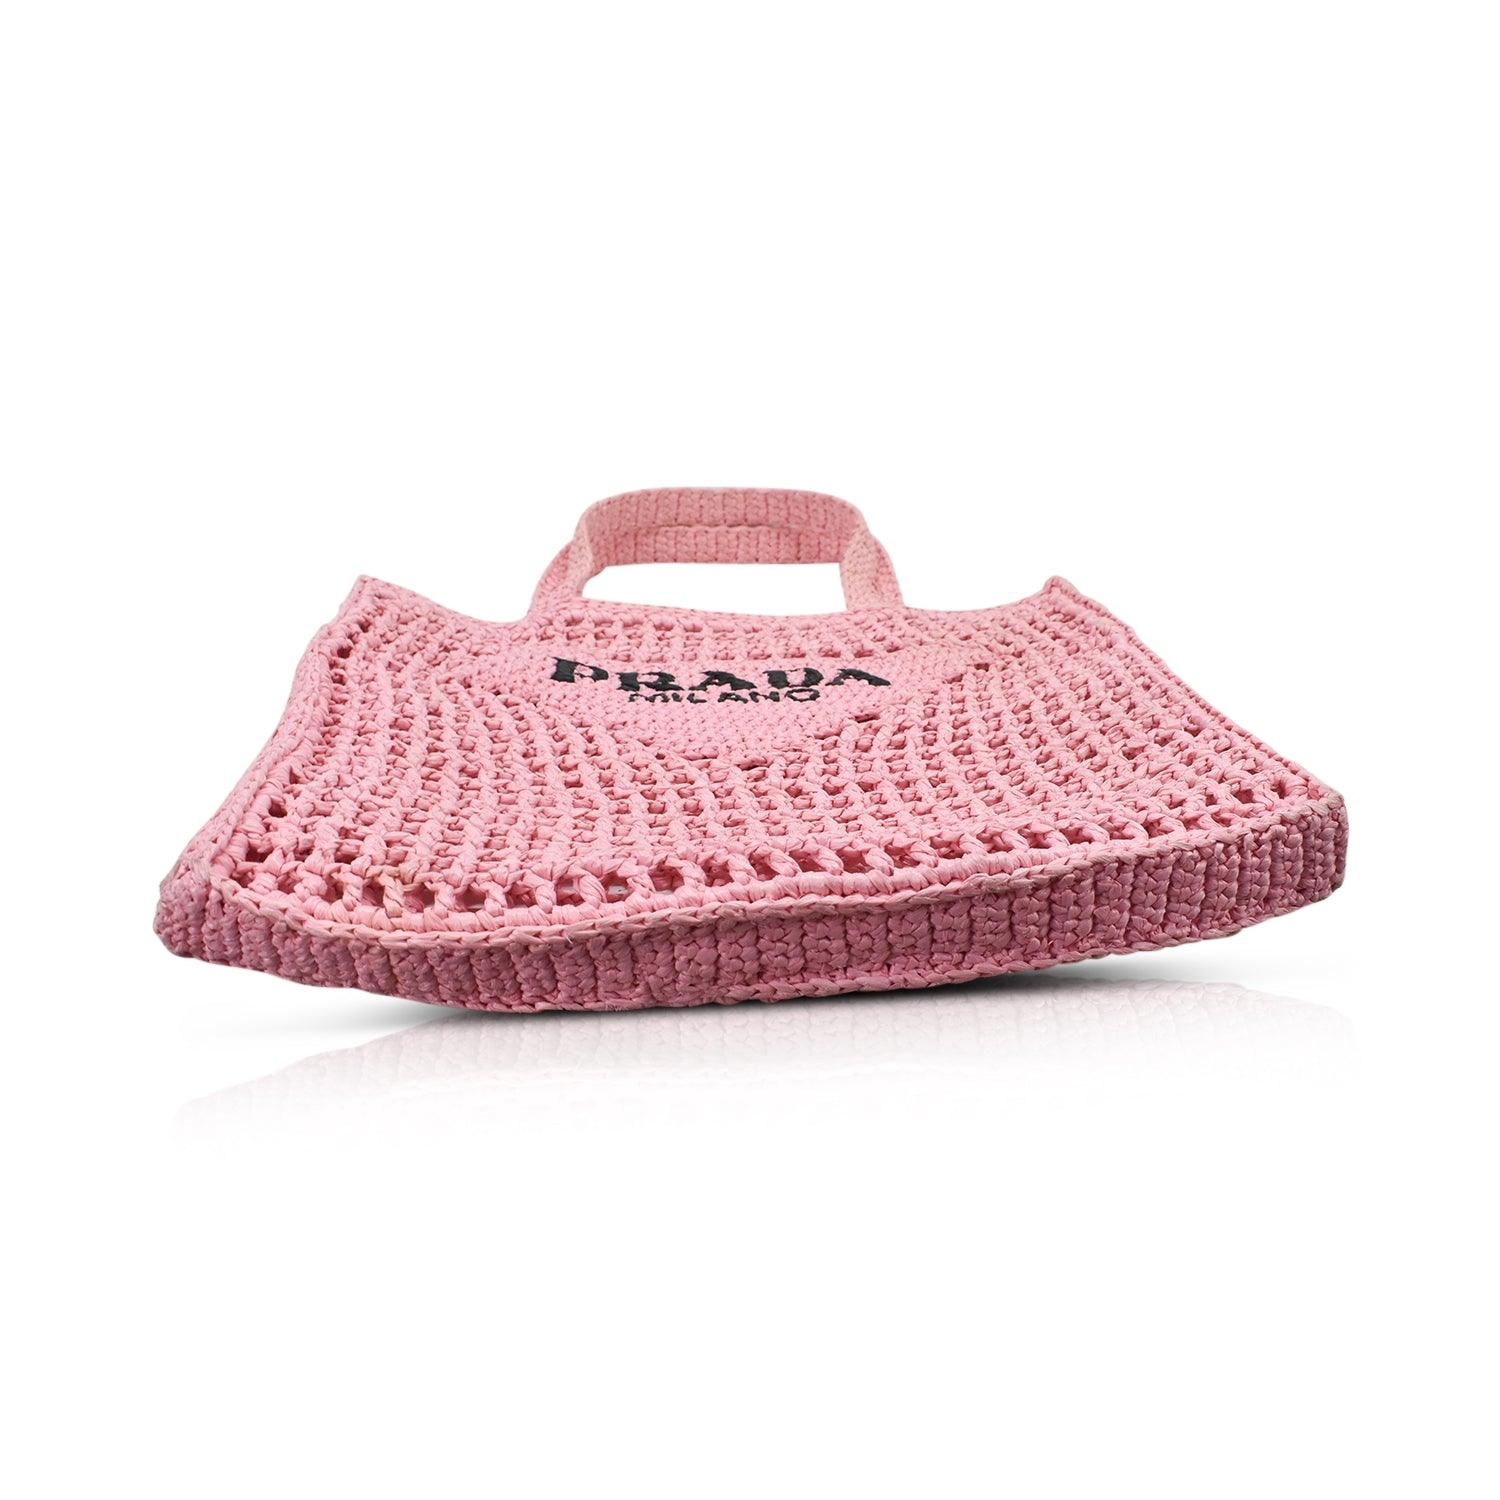 Prada Crochet Tote - Fashionably Yours